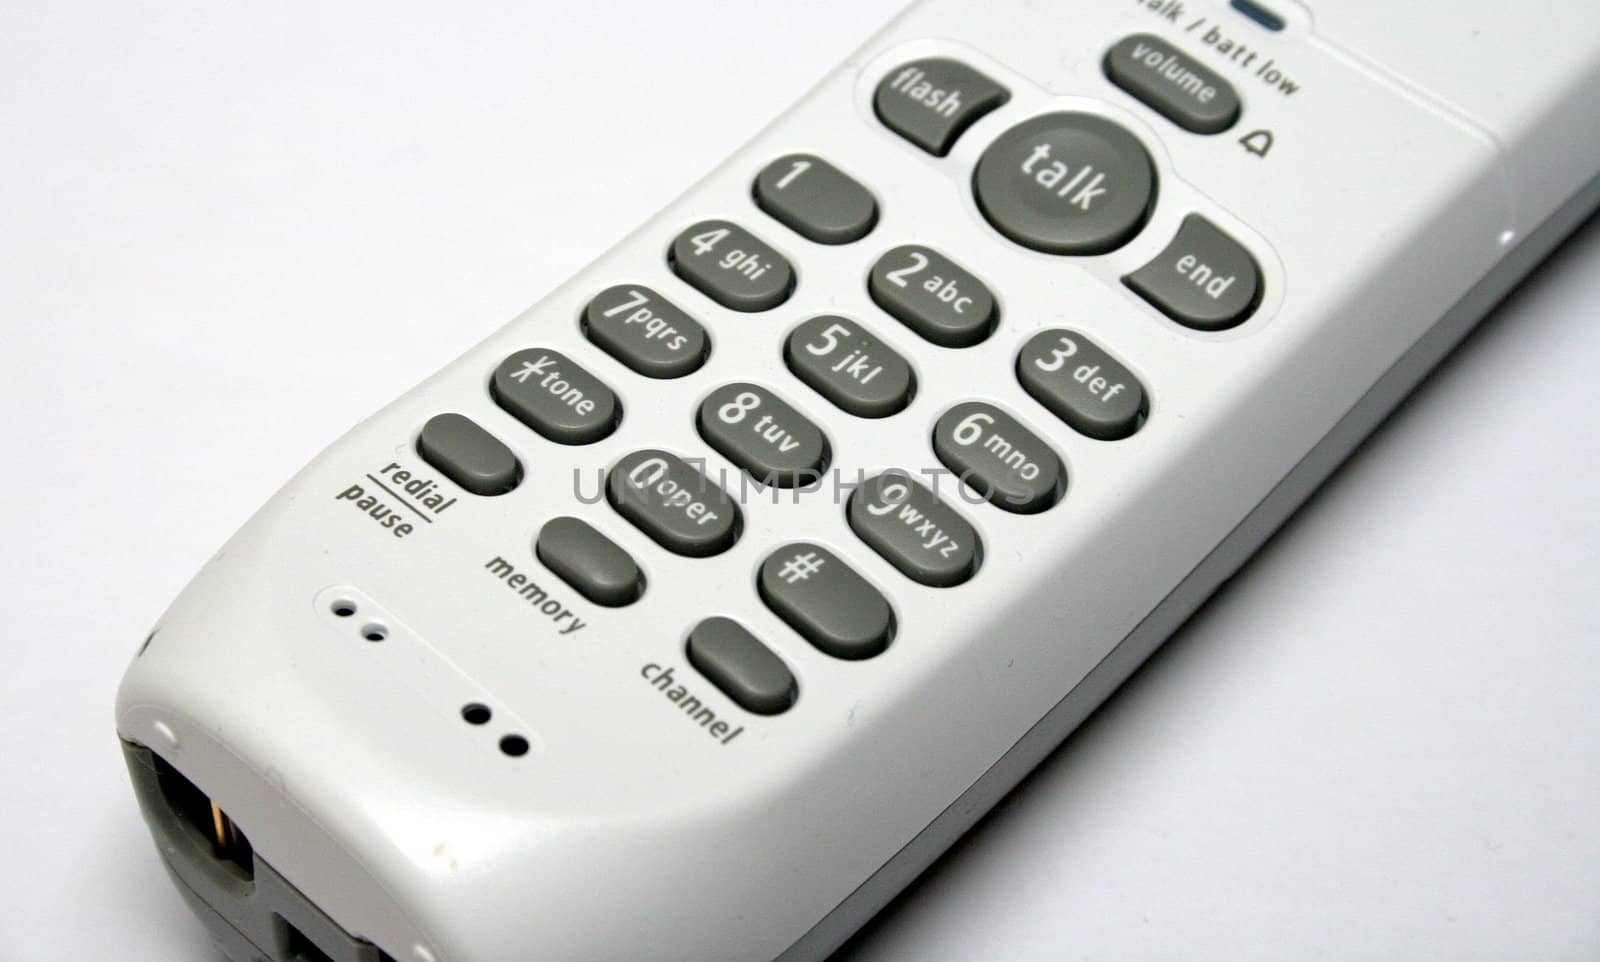 phone keypad, gray touchtone keys on a white telephone